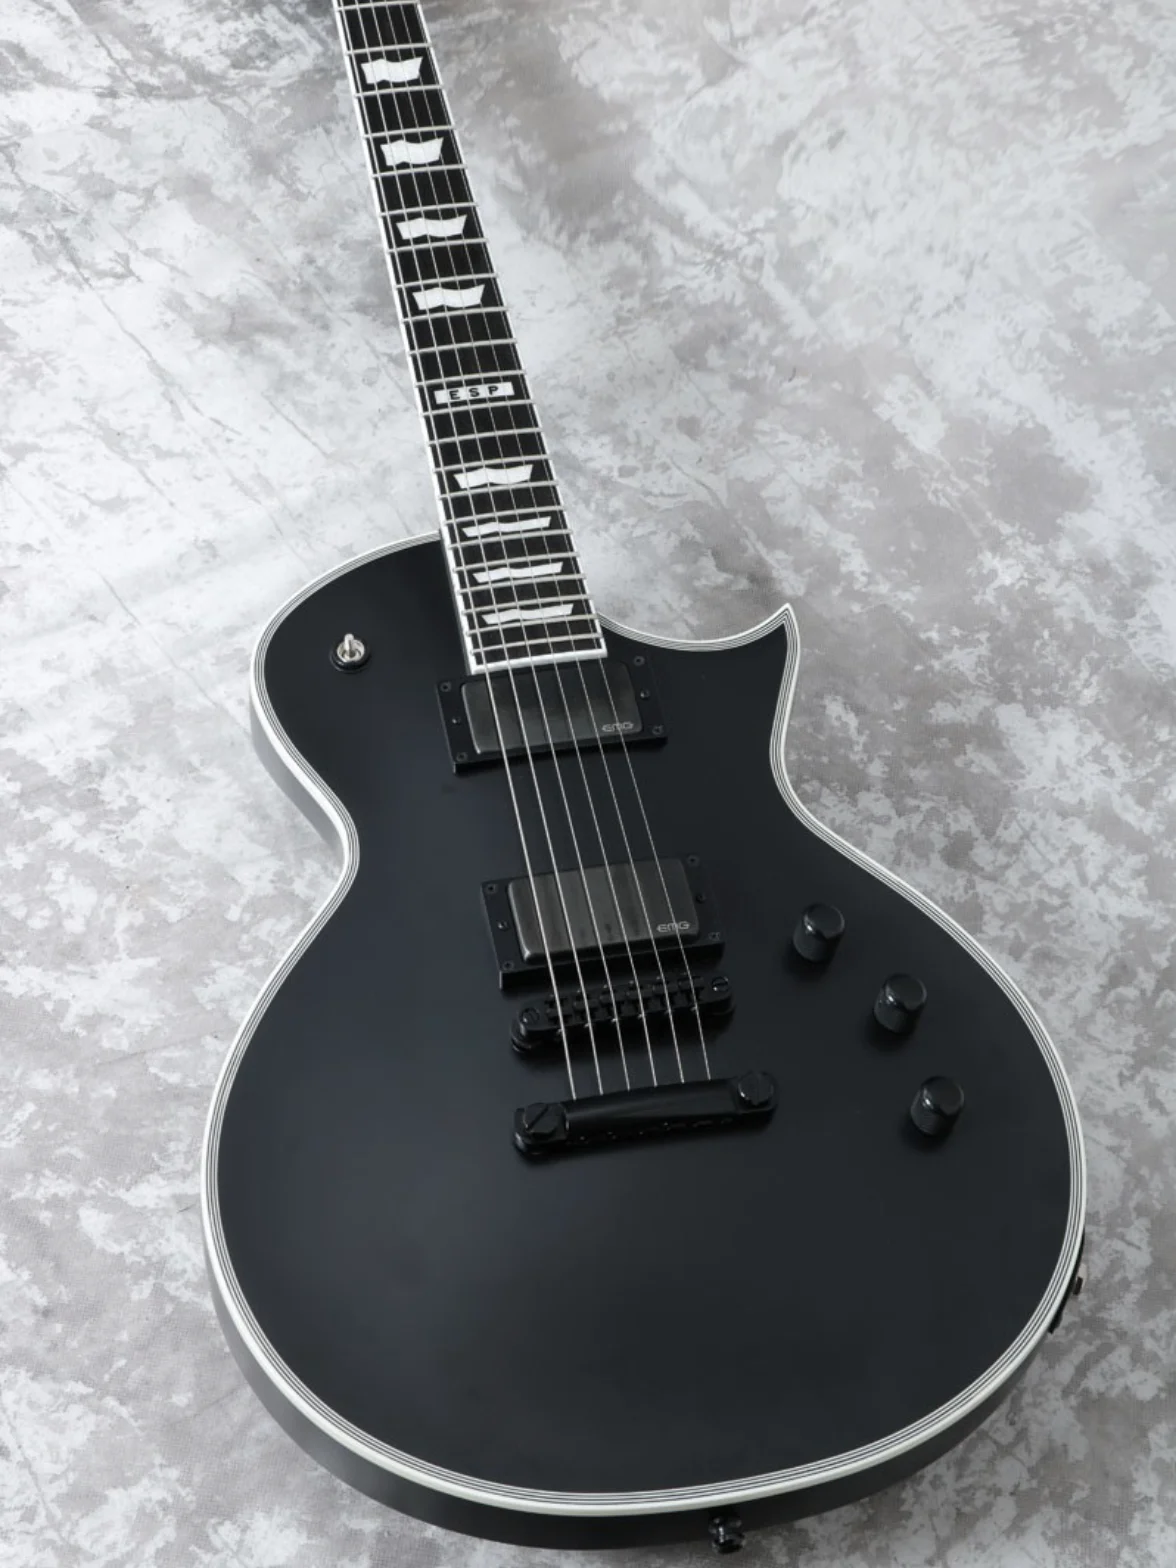 

ESP Black Custom Electric Guitar with Active EMG Pickups,Mahogany Body Rosewood Fingerboard High Quality Guitarar